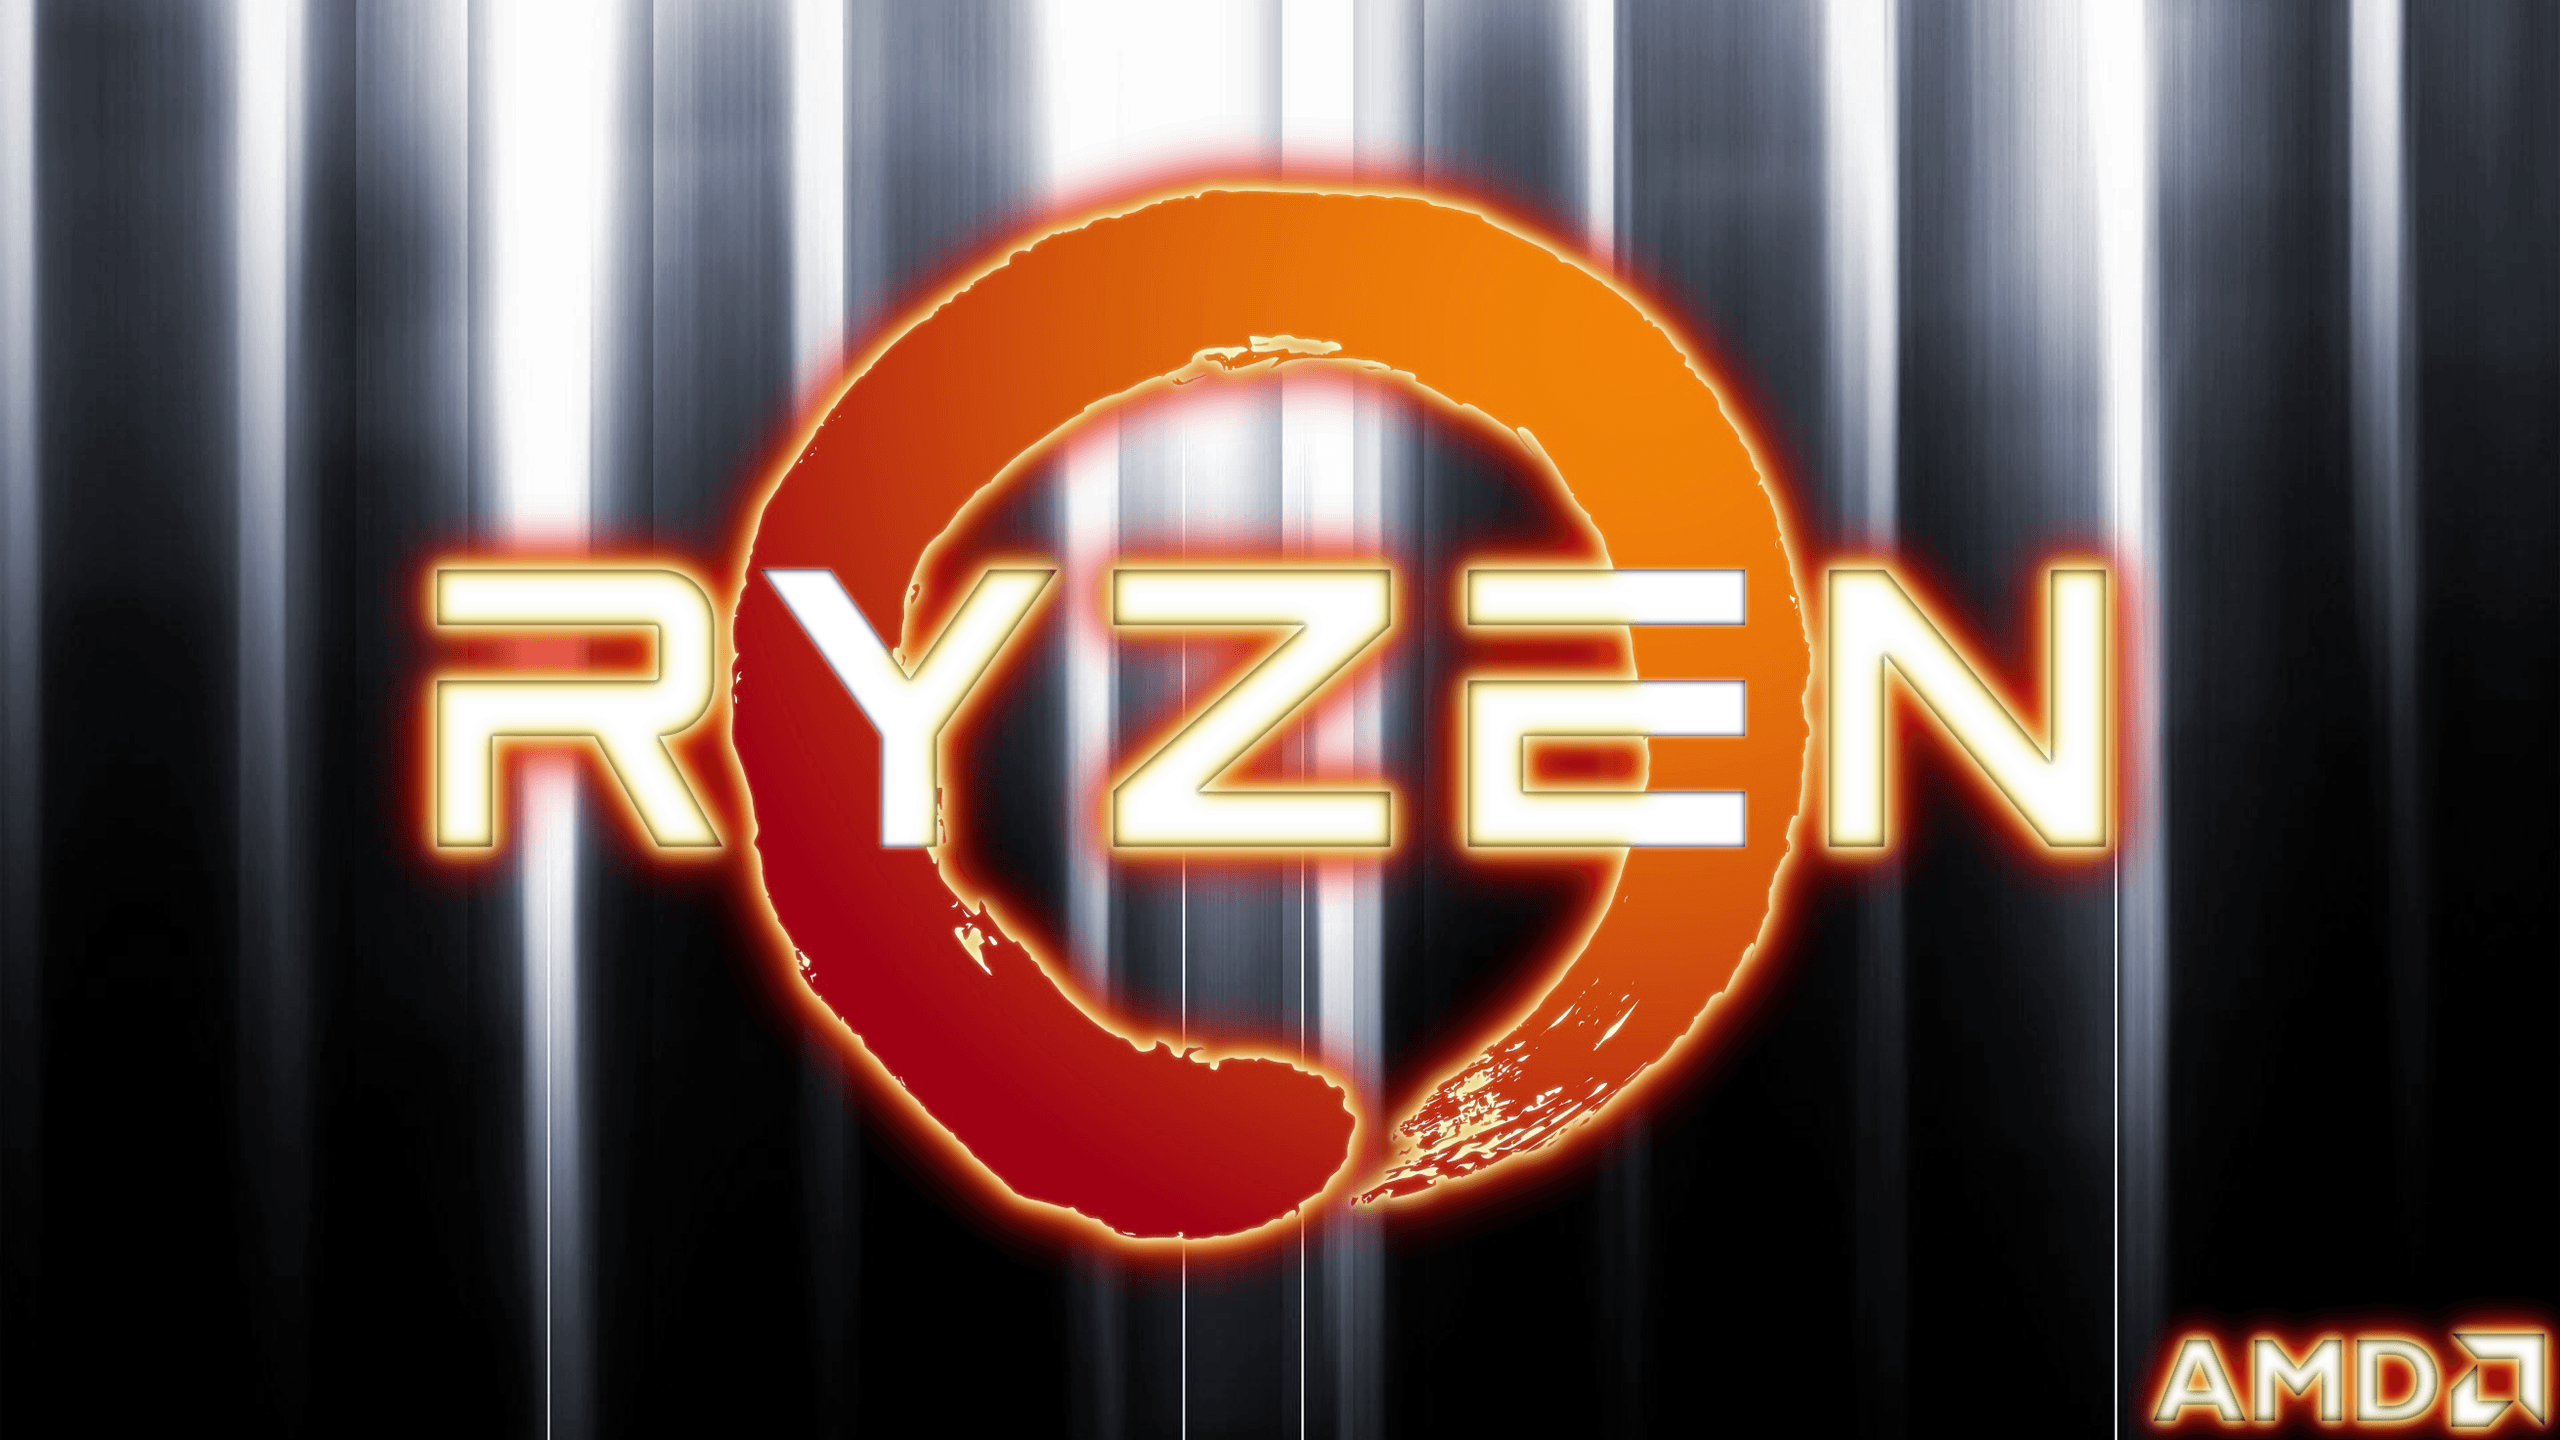 Red Hot AMD RYZEN Wallpaper [2560 X 1440]